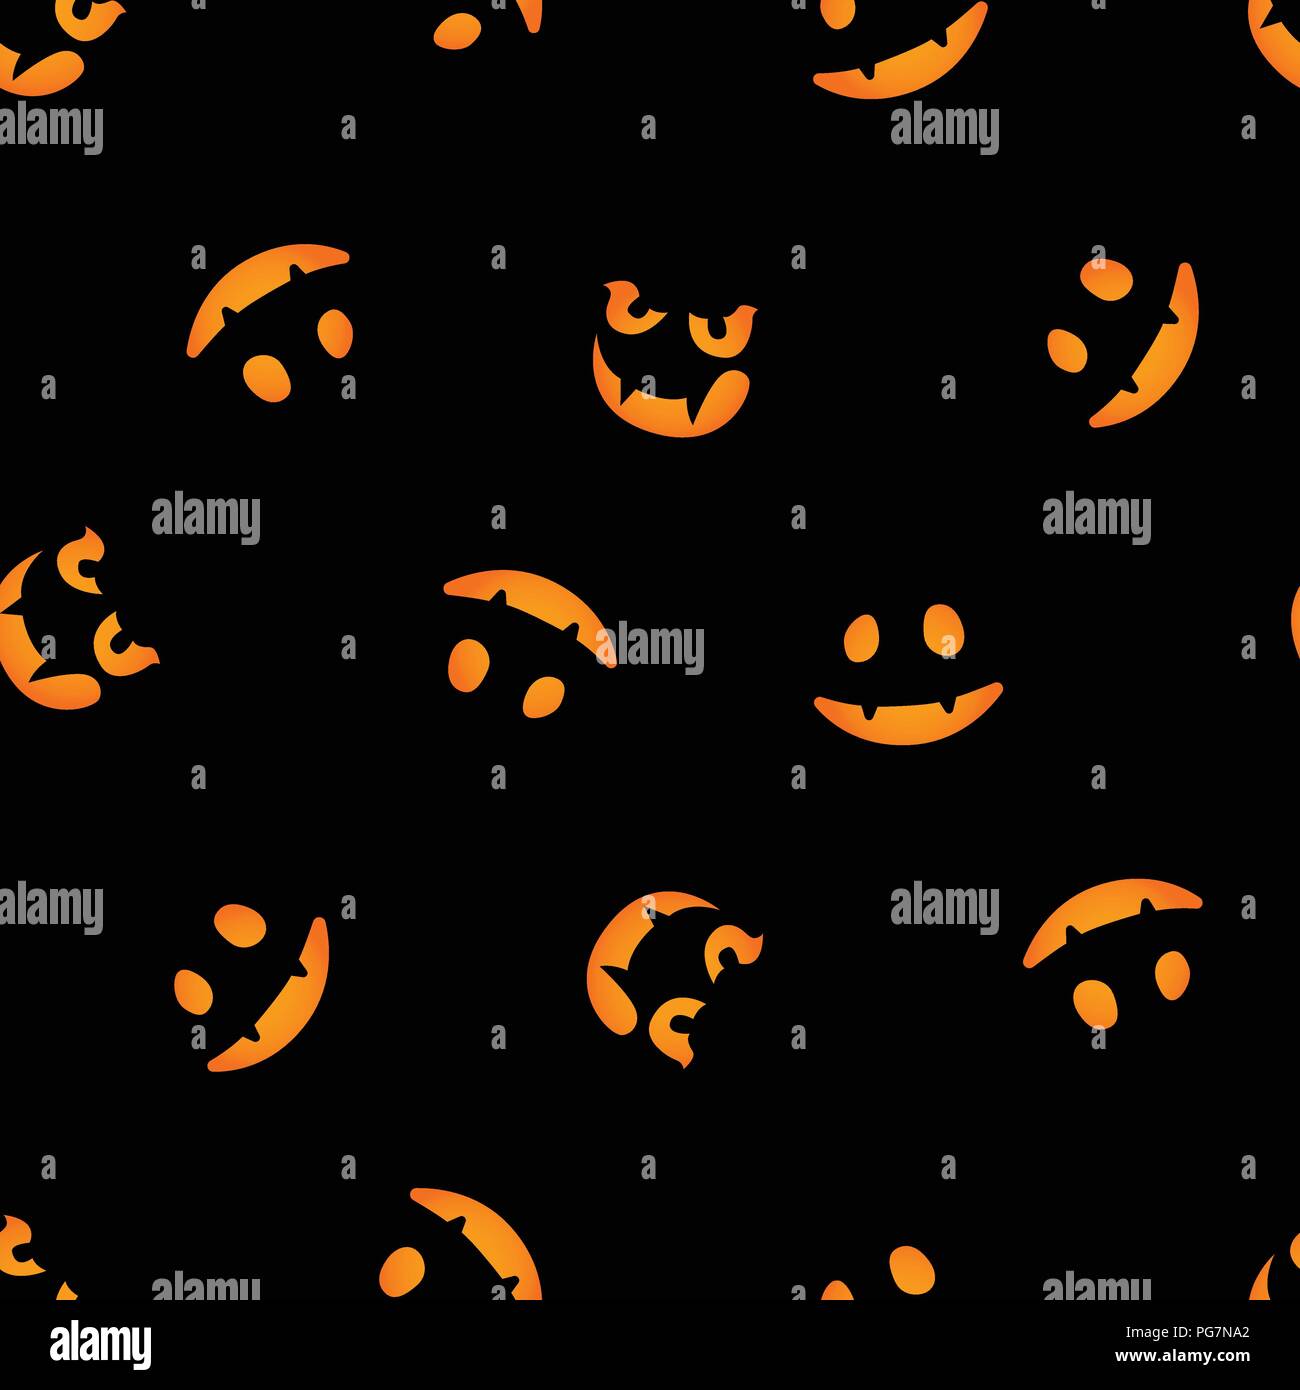 Pumpkin faces glowing on dark background. Seamless pattern. Stock Vector